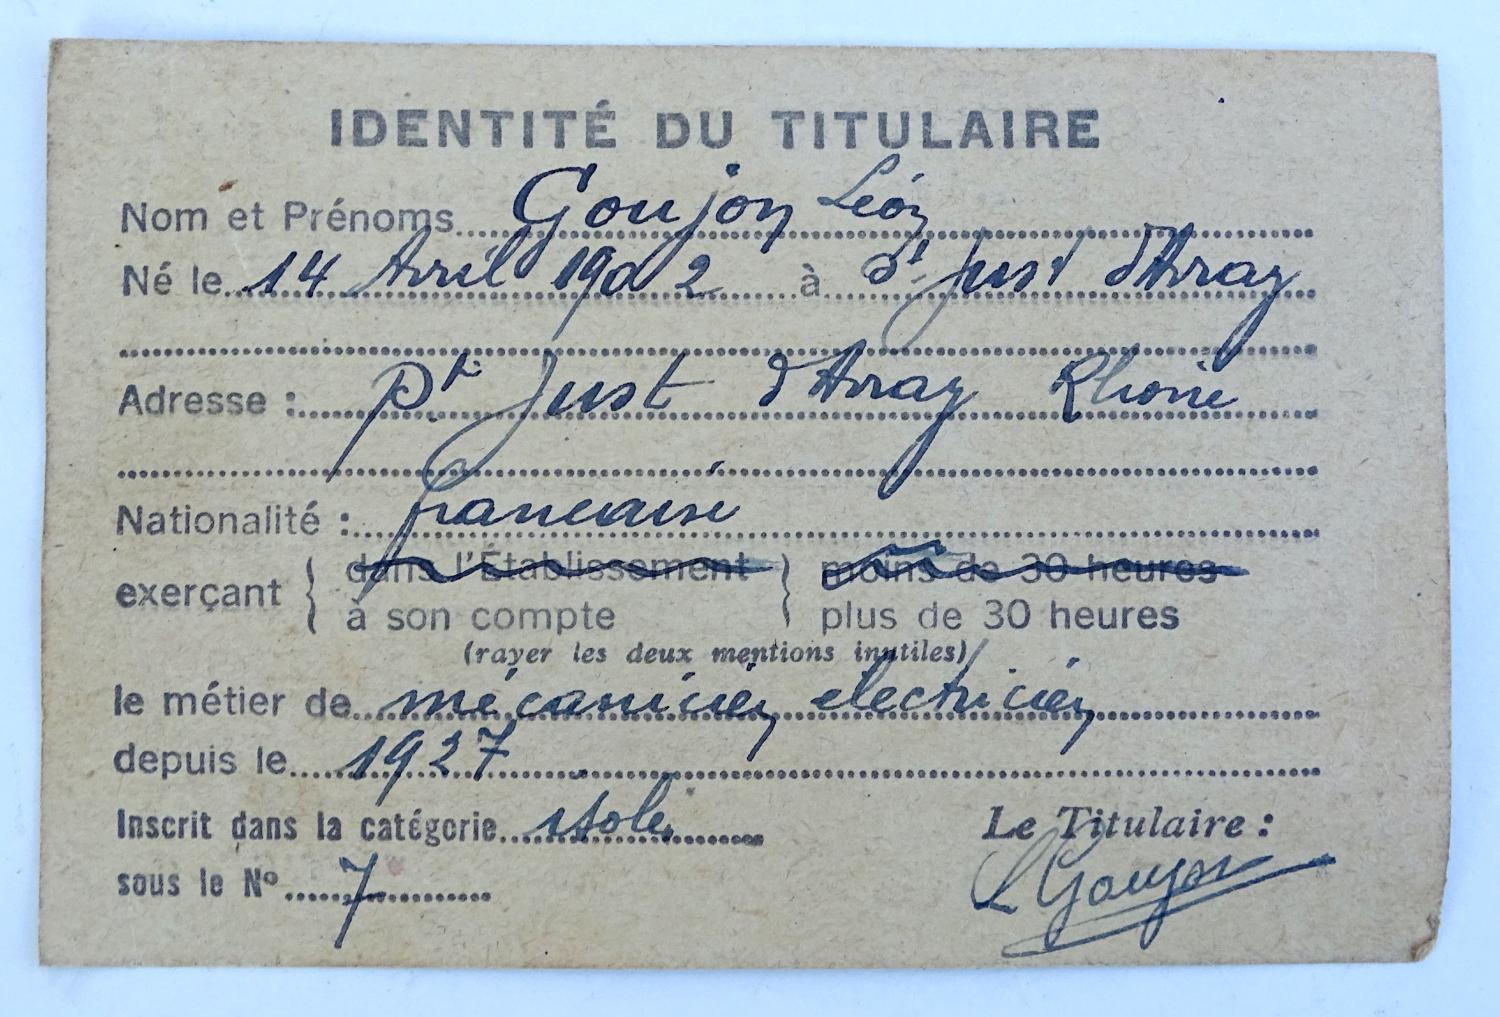 Certificat de travail 1943  Rh&ocirc;ne   STO